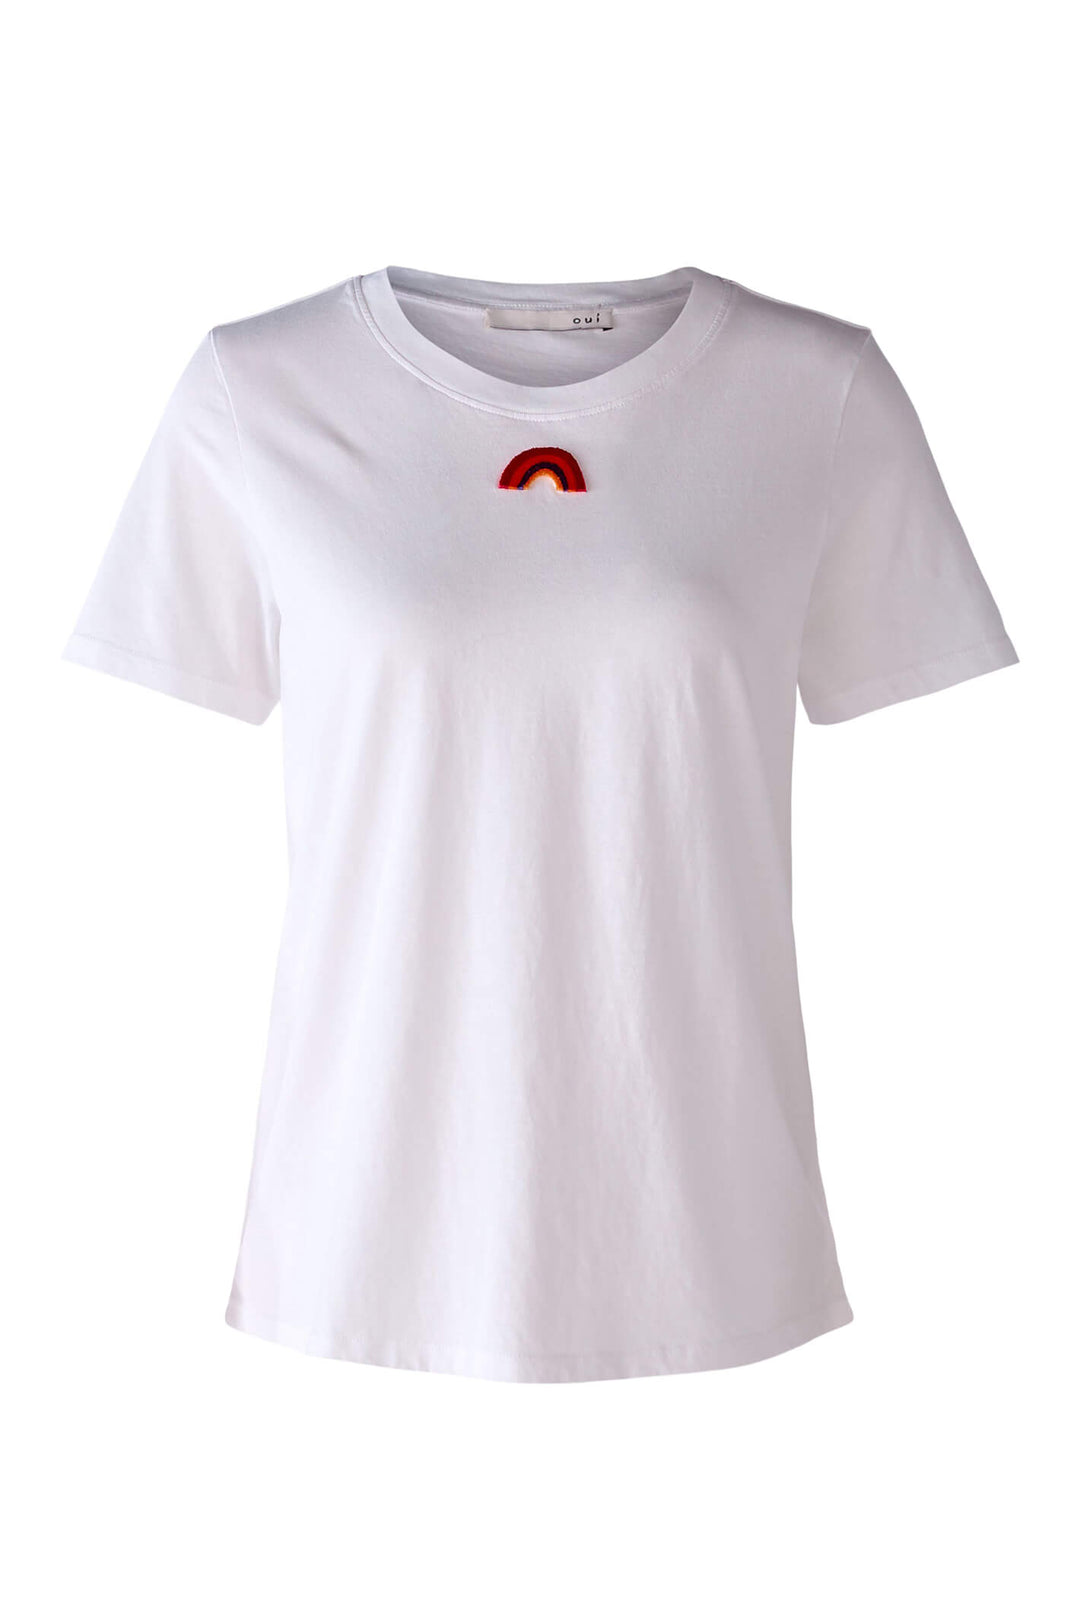 Oui 78901 Optic White Motif T-Shirt - Olivia Grace Fashion